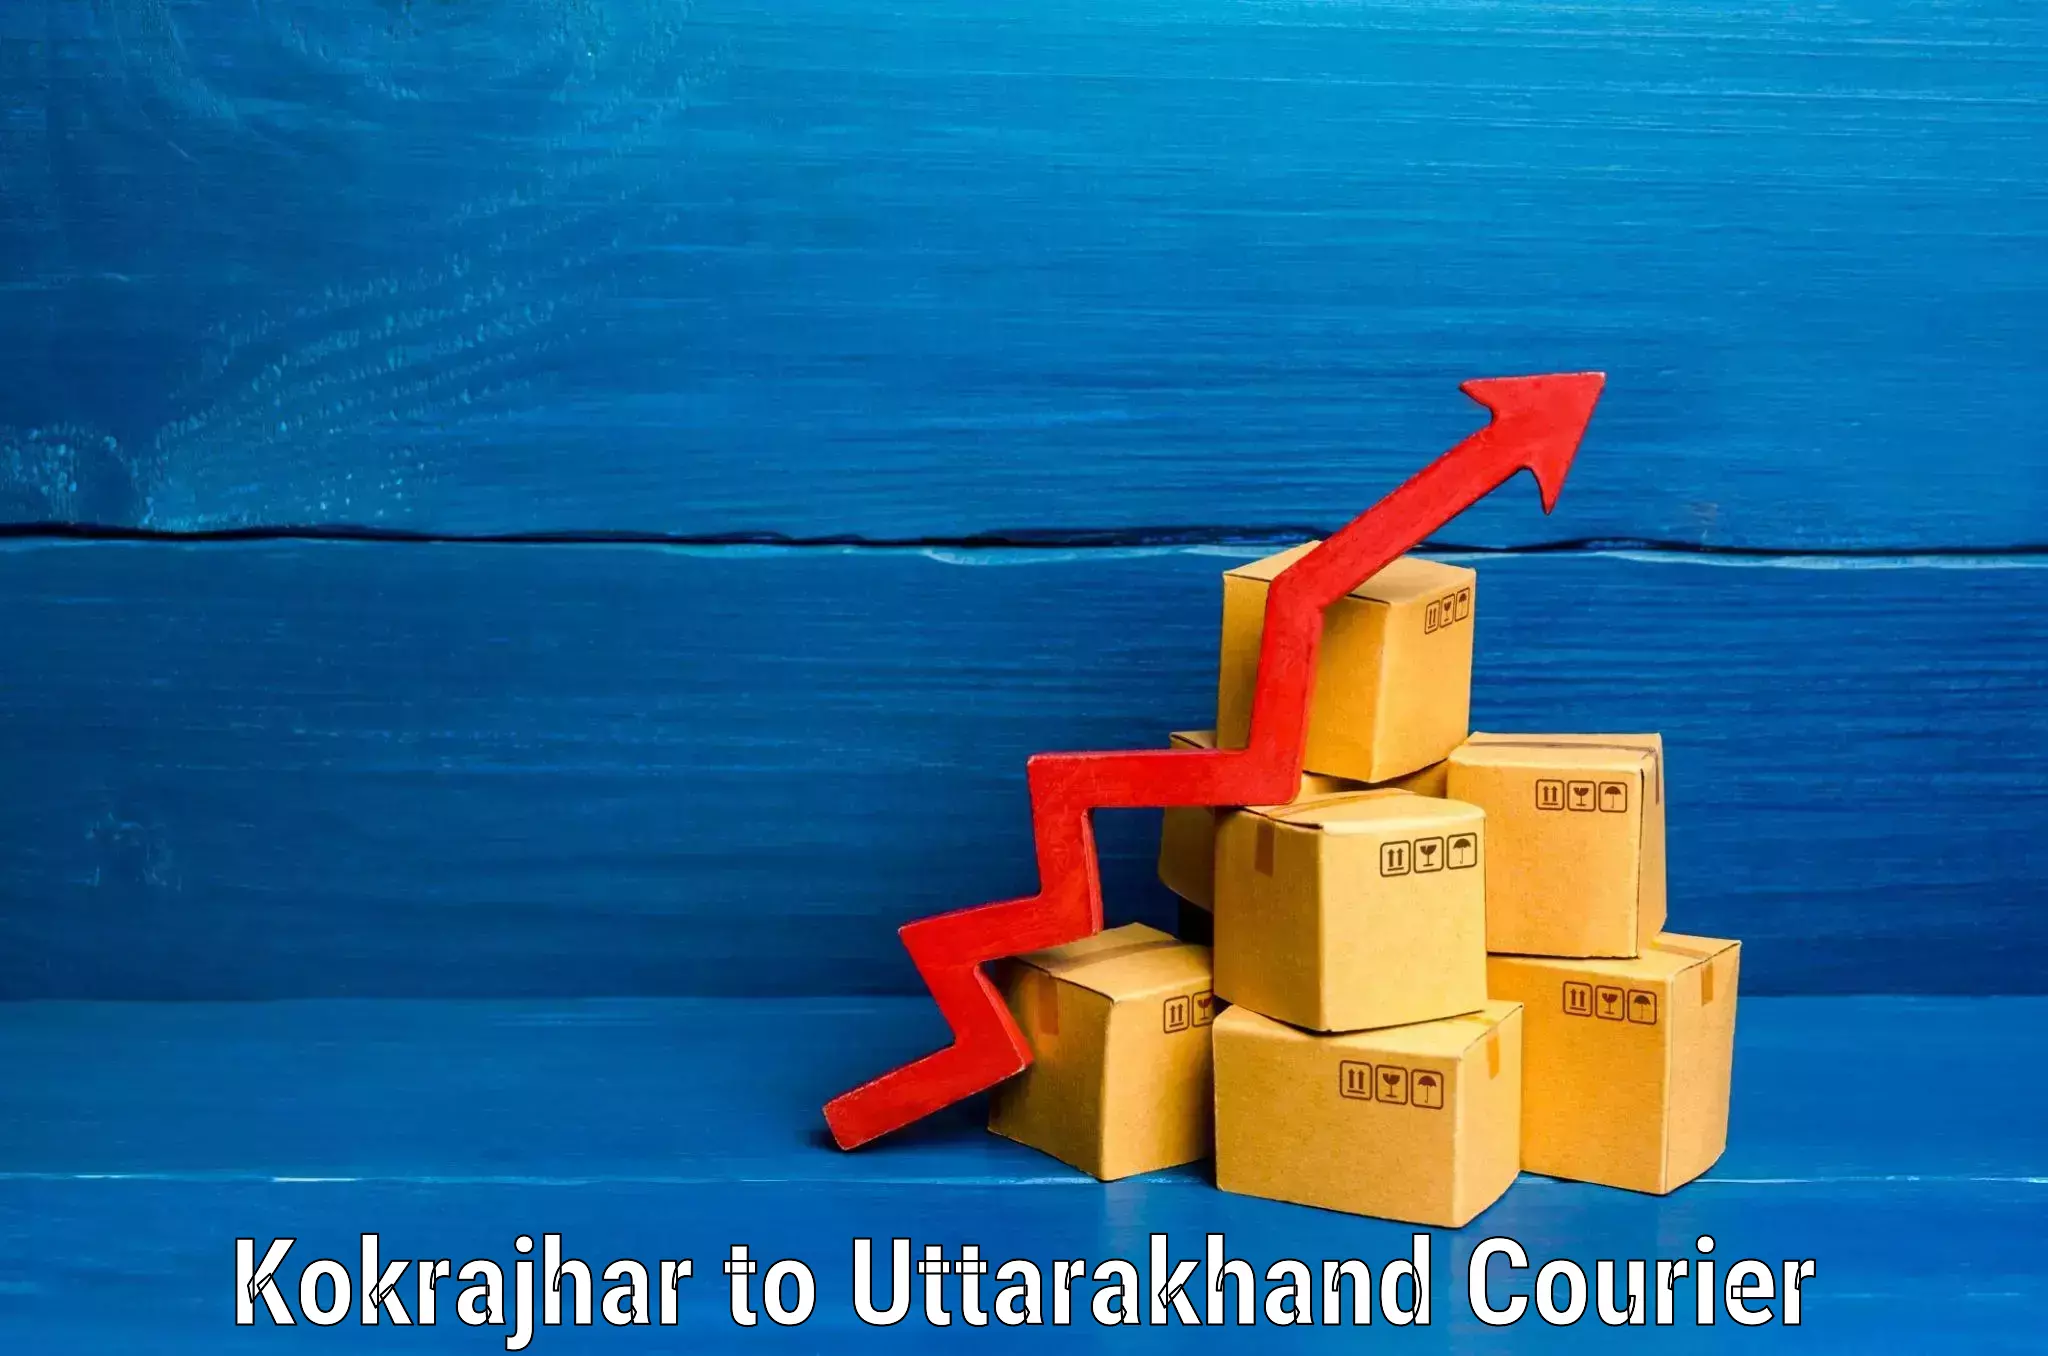 Urgent luggage shipment in Kokrajhar to Haldwani